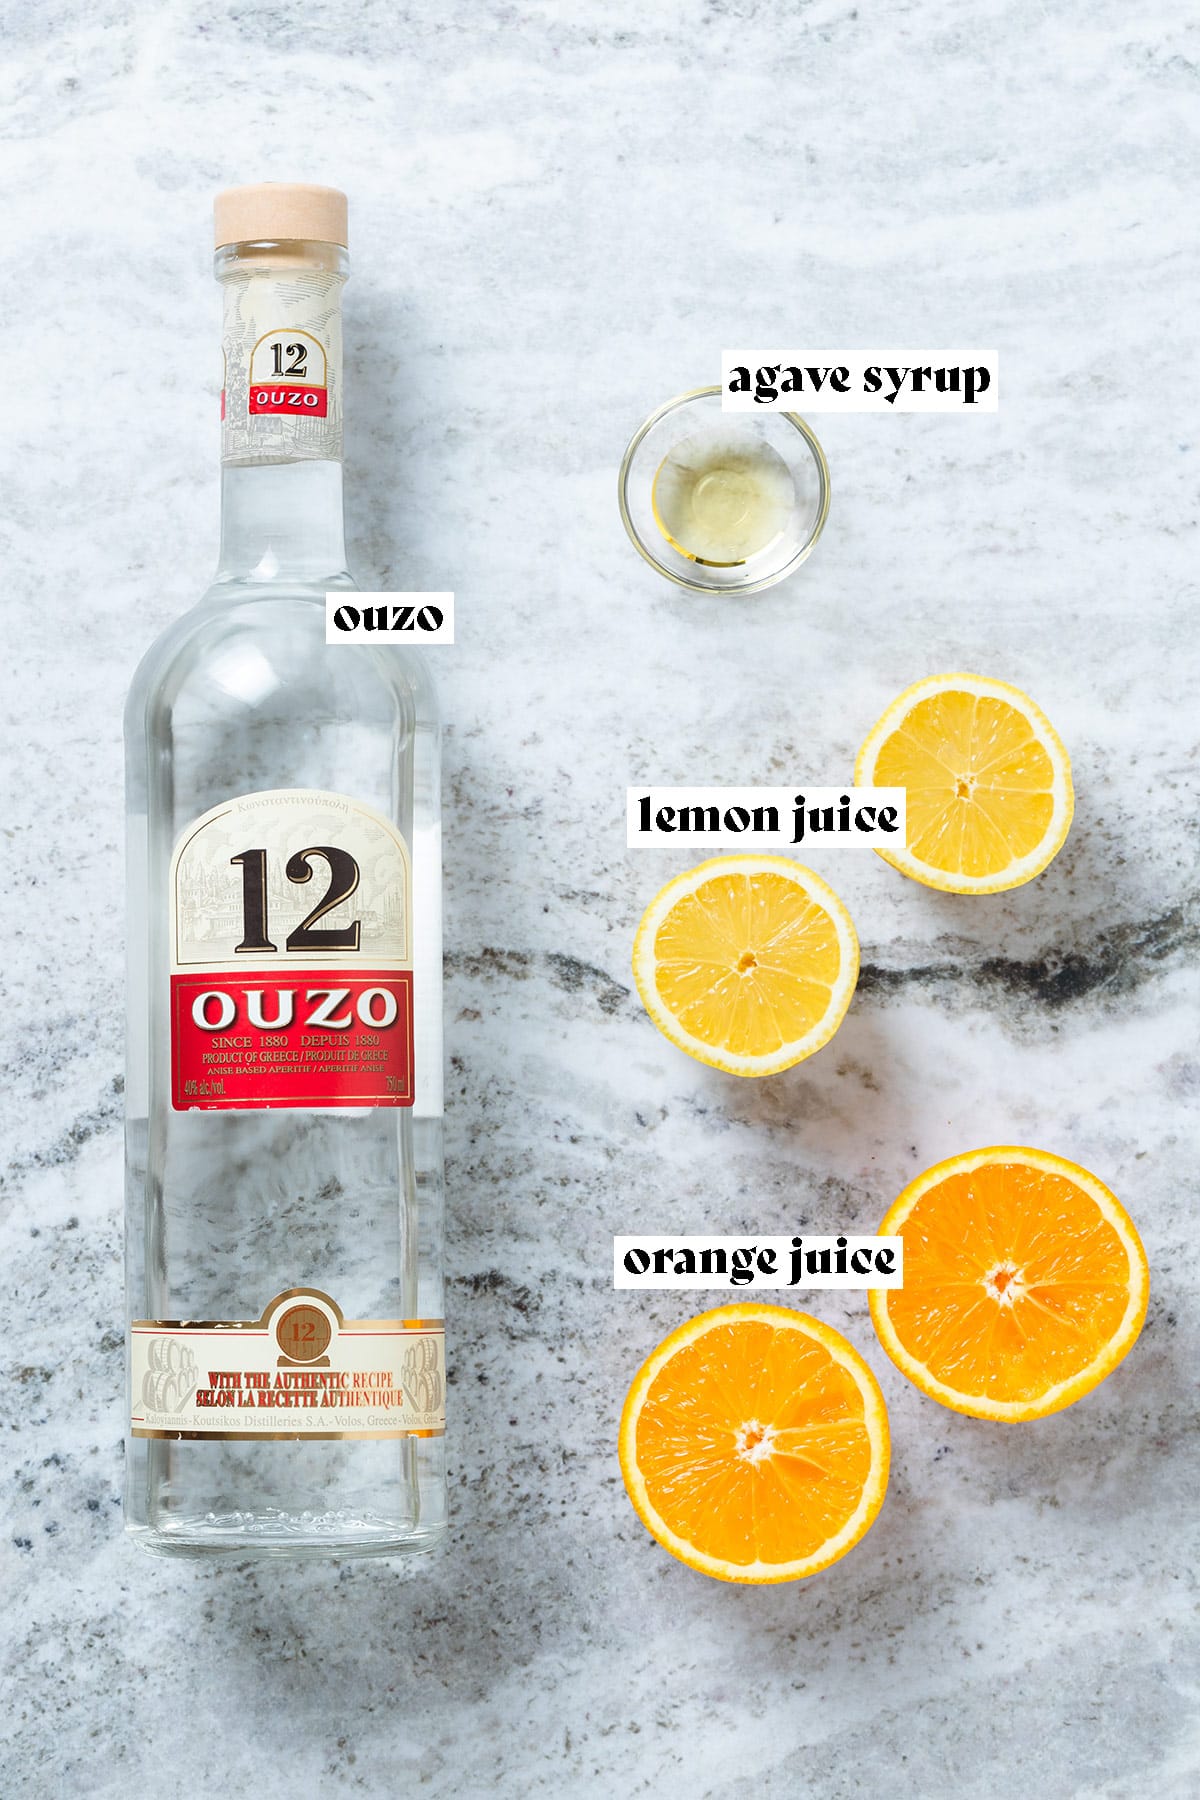 A bottle of Ouzo, halved lemon, orange, and agave syrup on a grey stone background.